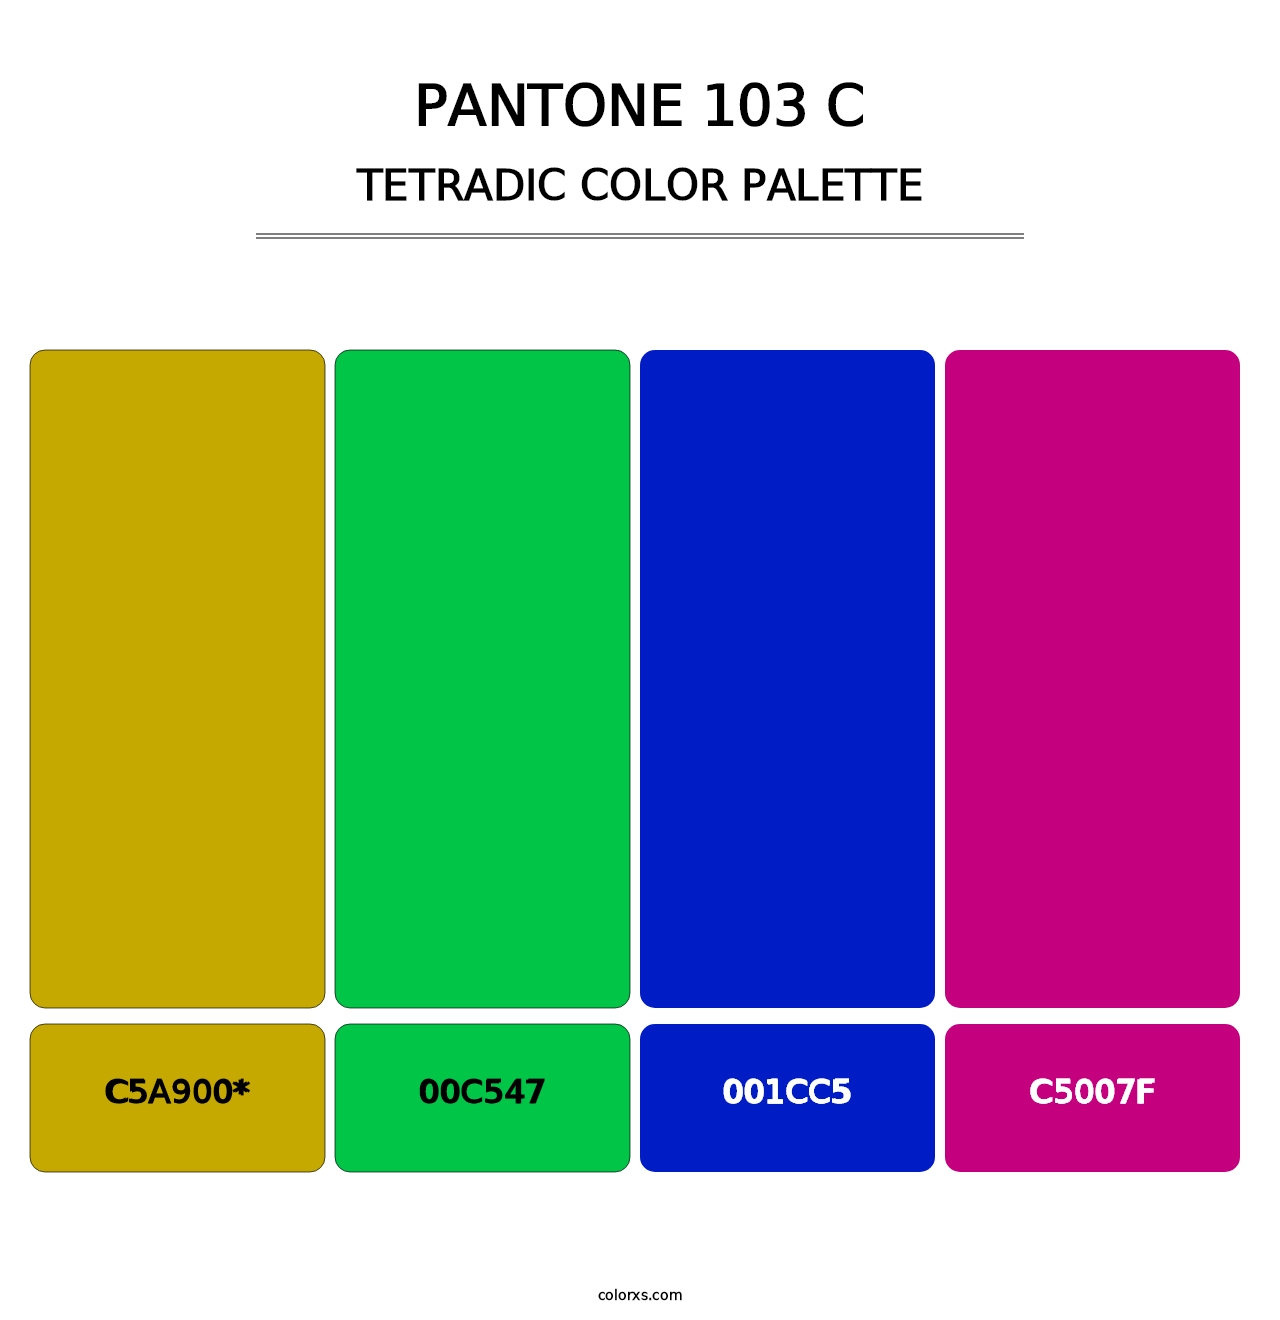 PANTONE 103 C - Tetradic Color Palette